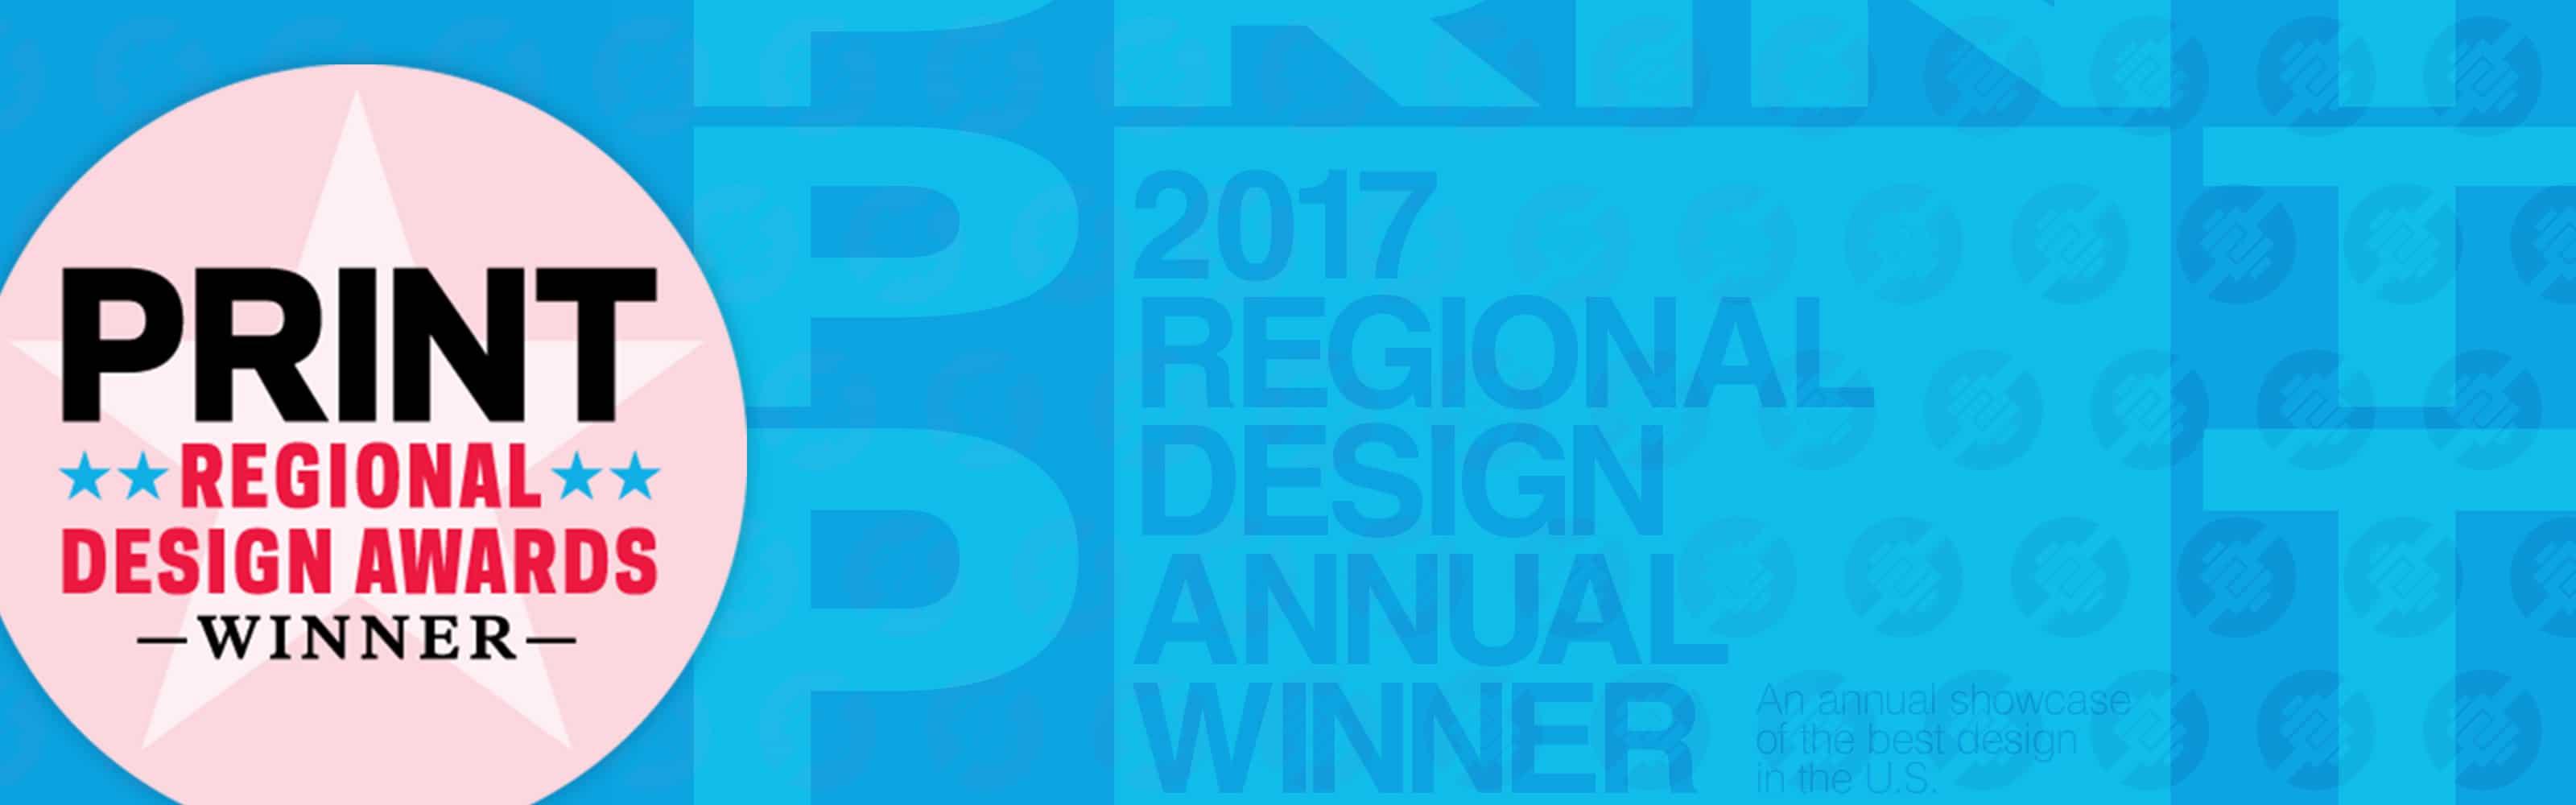 Print Regional Design Annual Linchpin